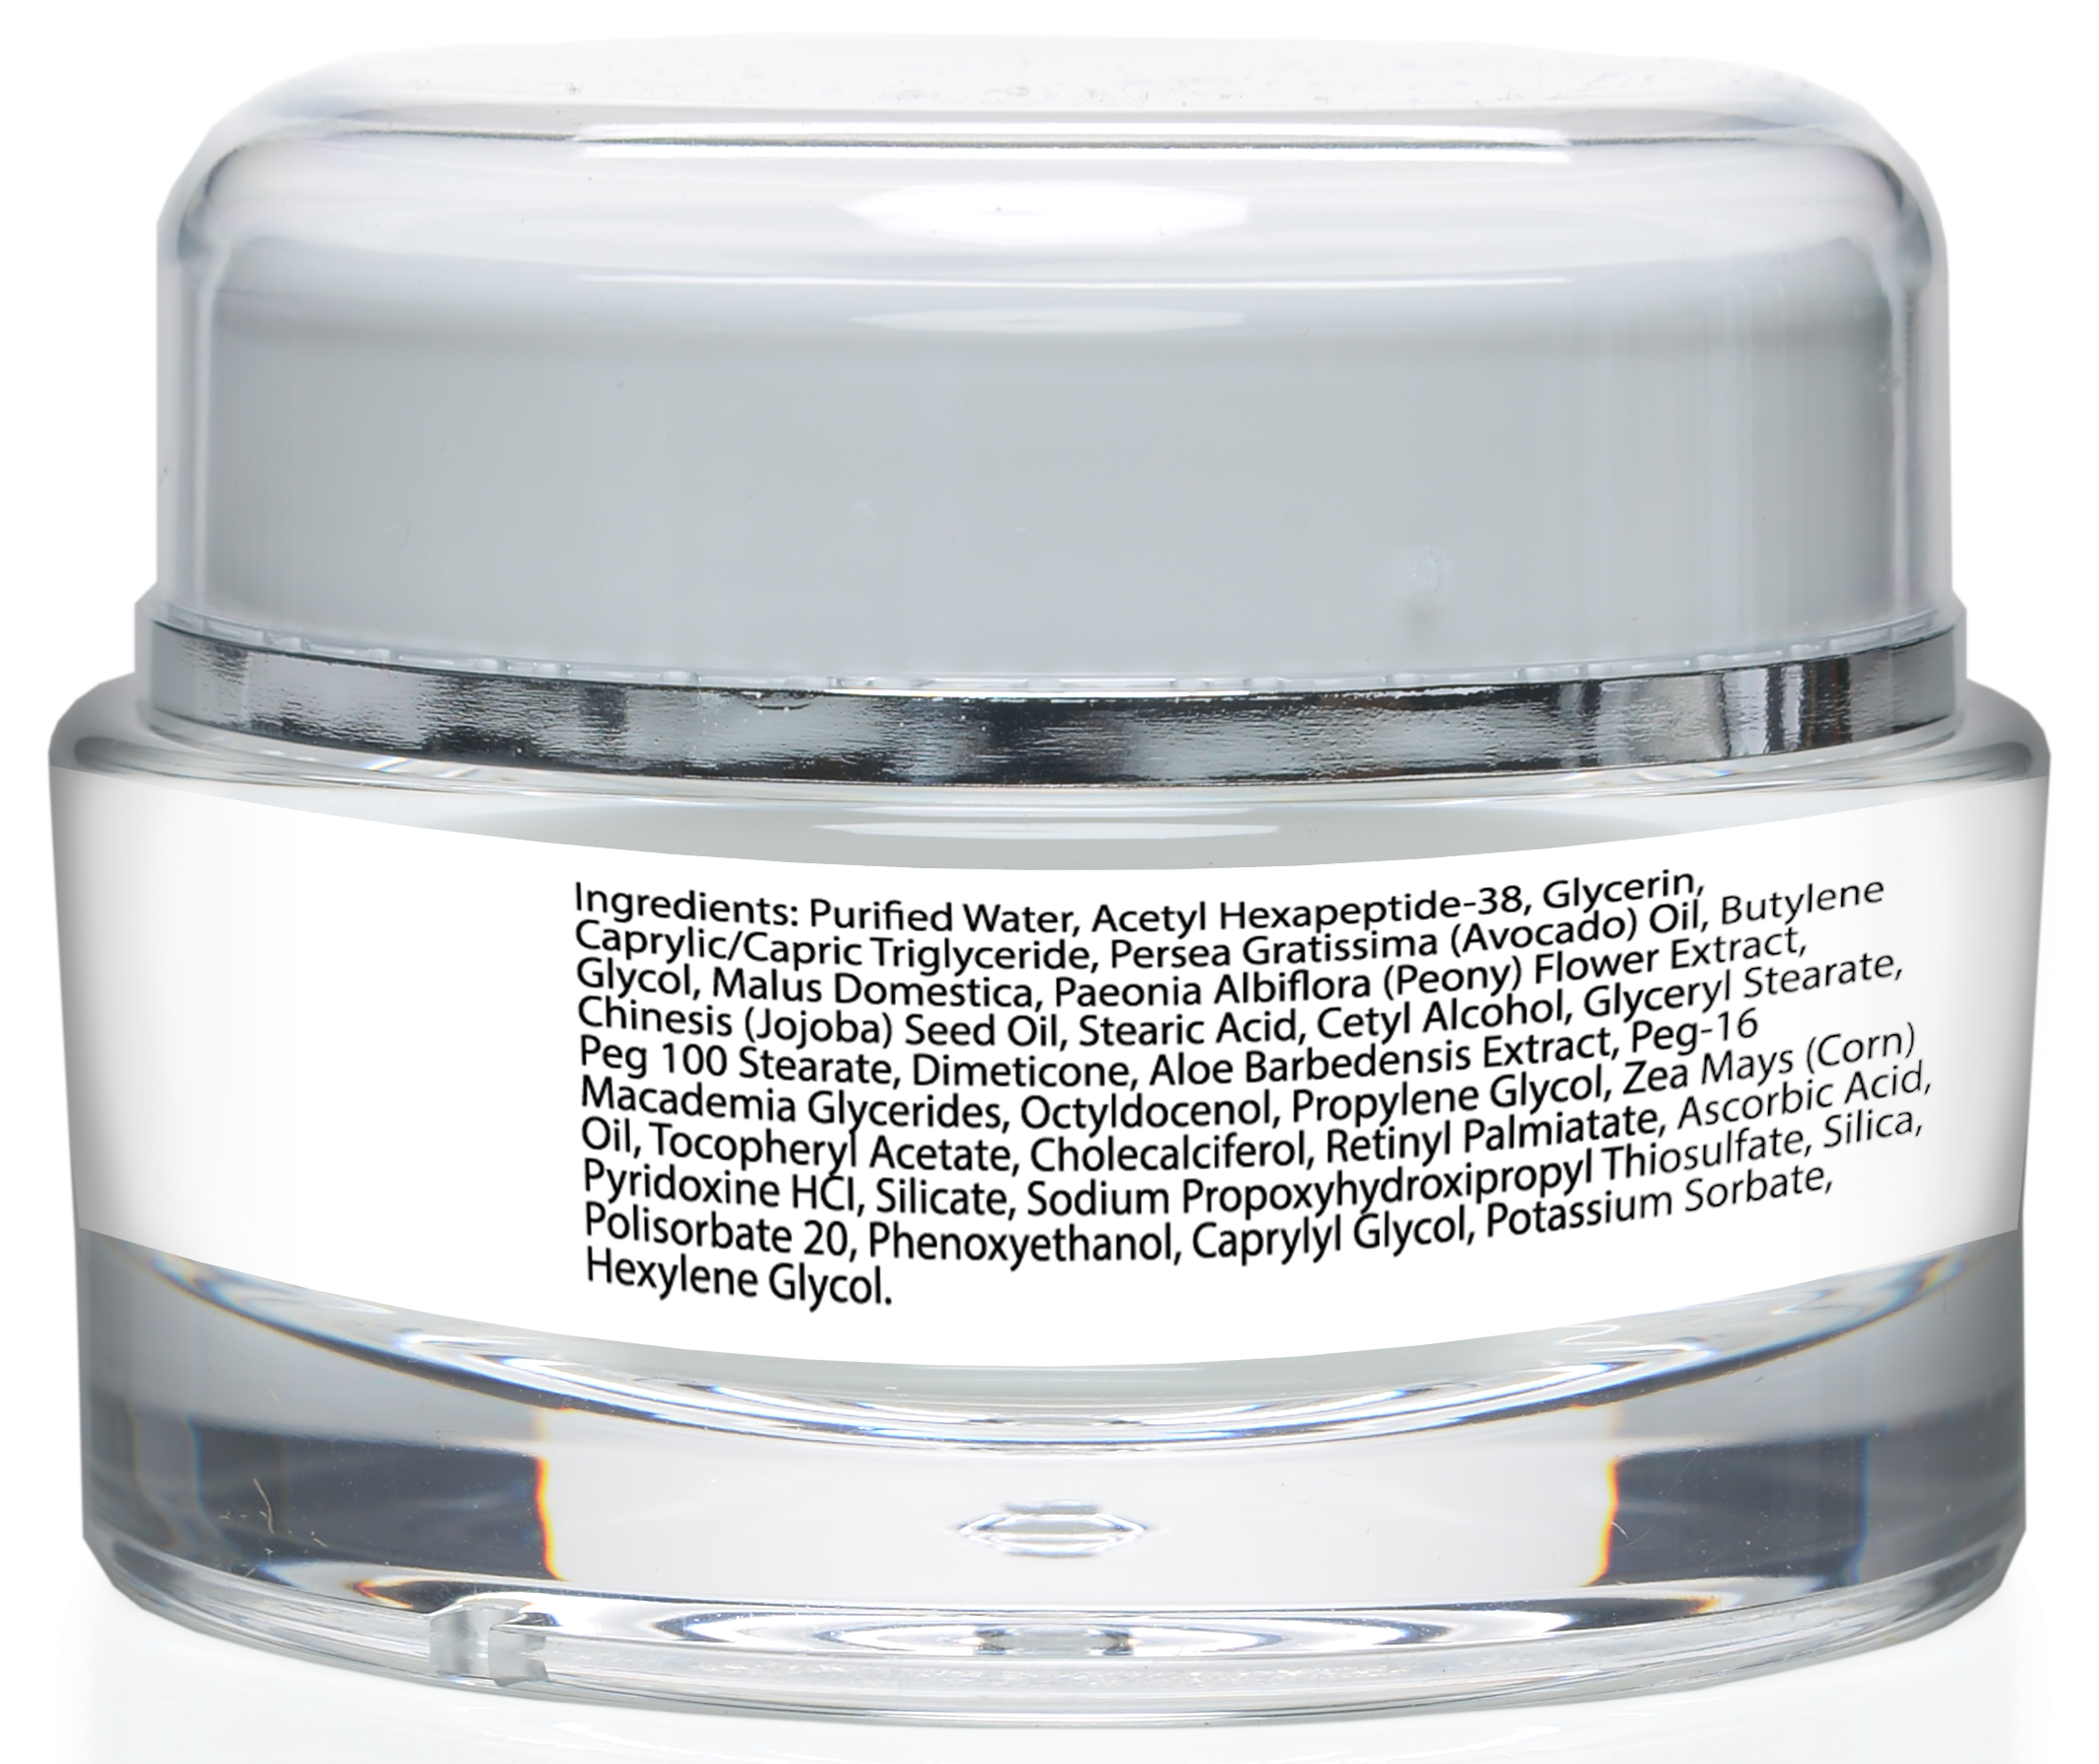 NuVita Skin Revitalizing Moisturizer - Premium Skincare - Advanced Formula to Diminish Fine Lines and Wrinkles - image 2 of 2